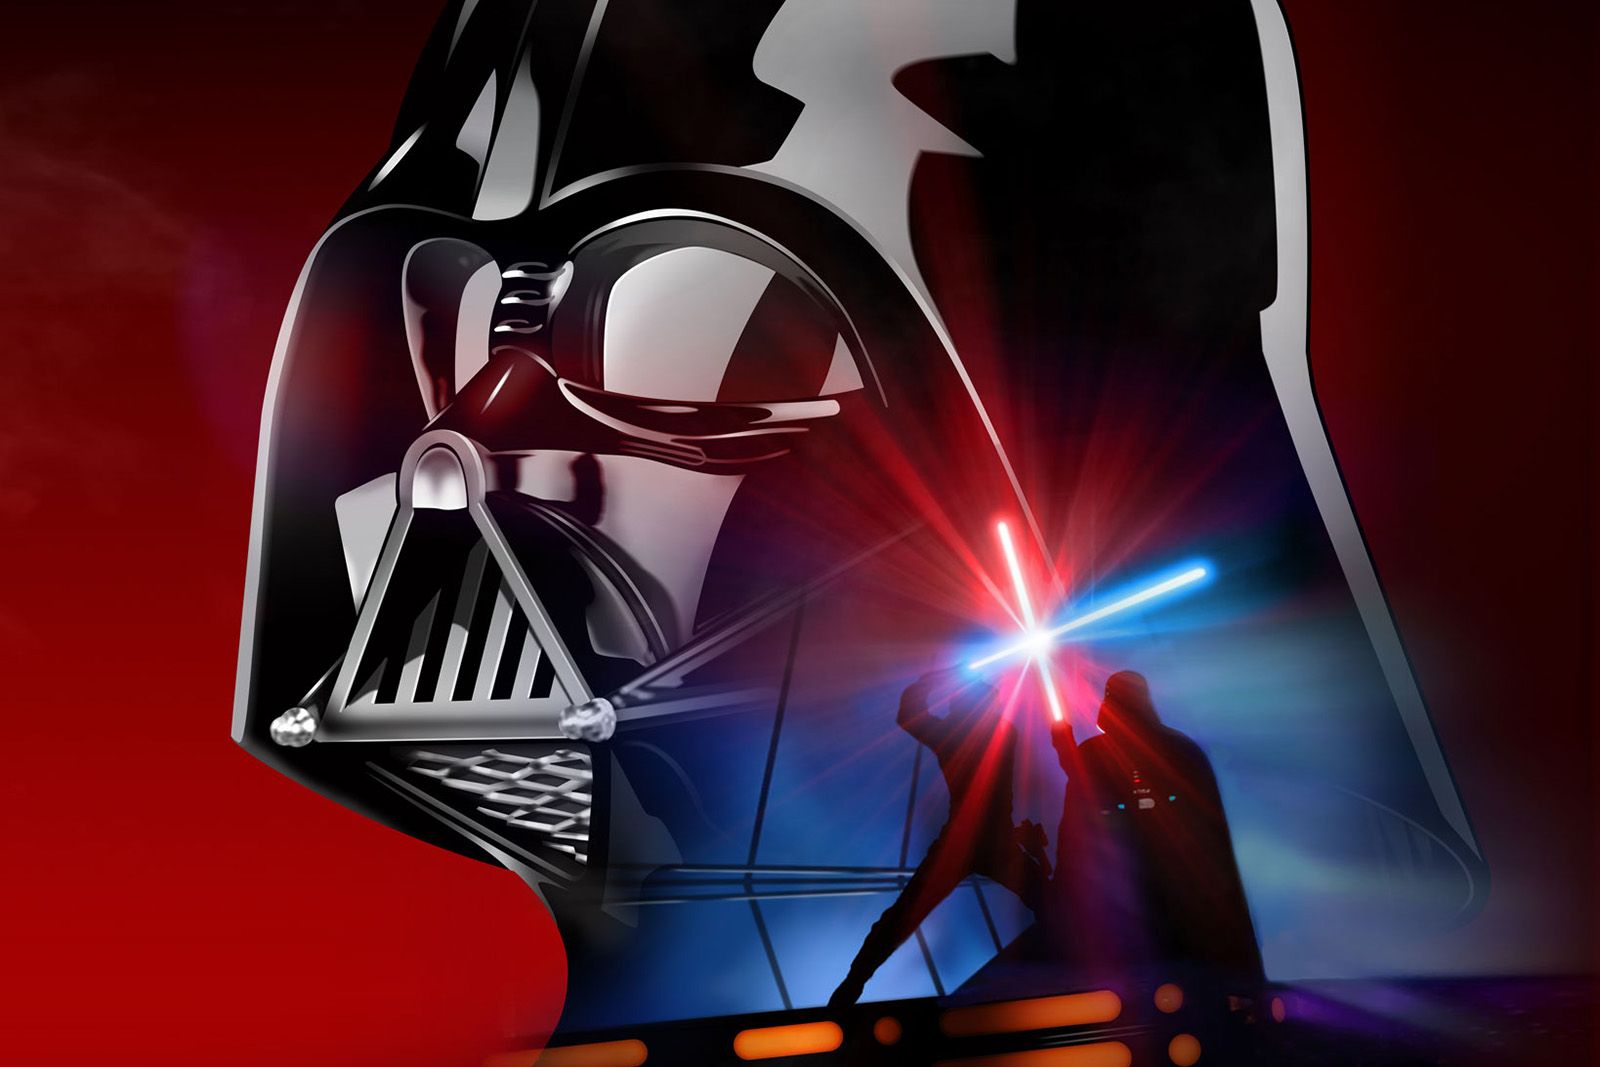 star wars comes to digital hd this week ahead of new star wars 7 trailer image 1